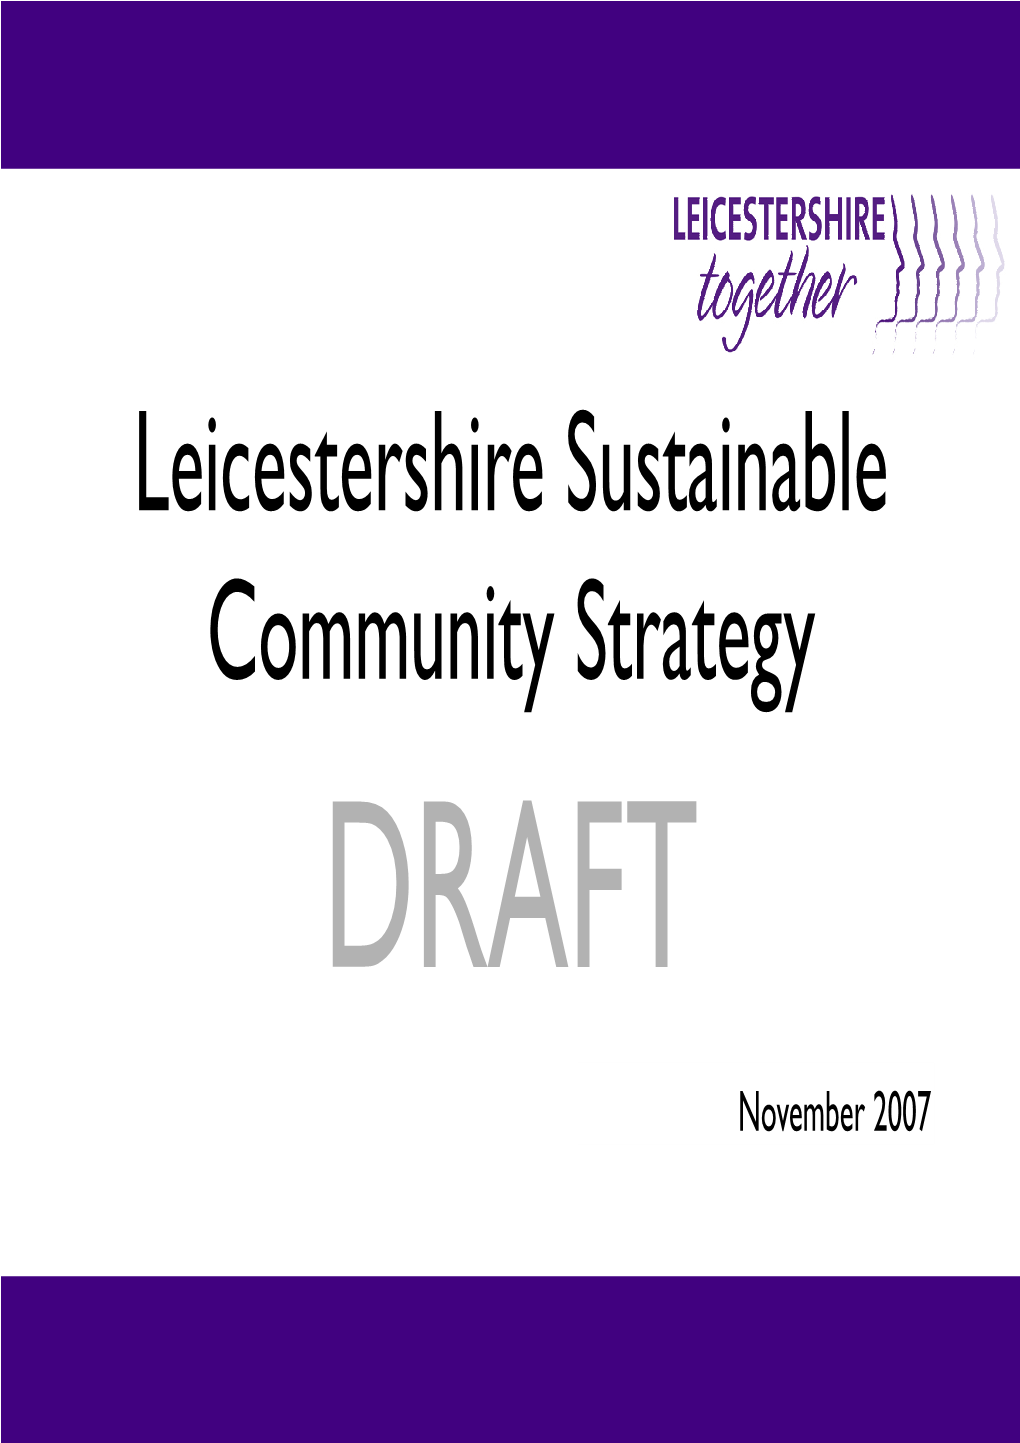 Community Strategy Draft Document